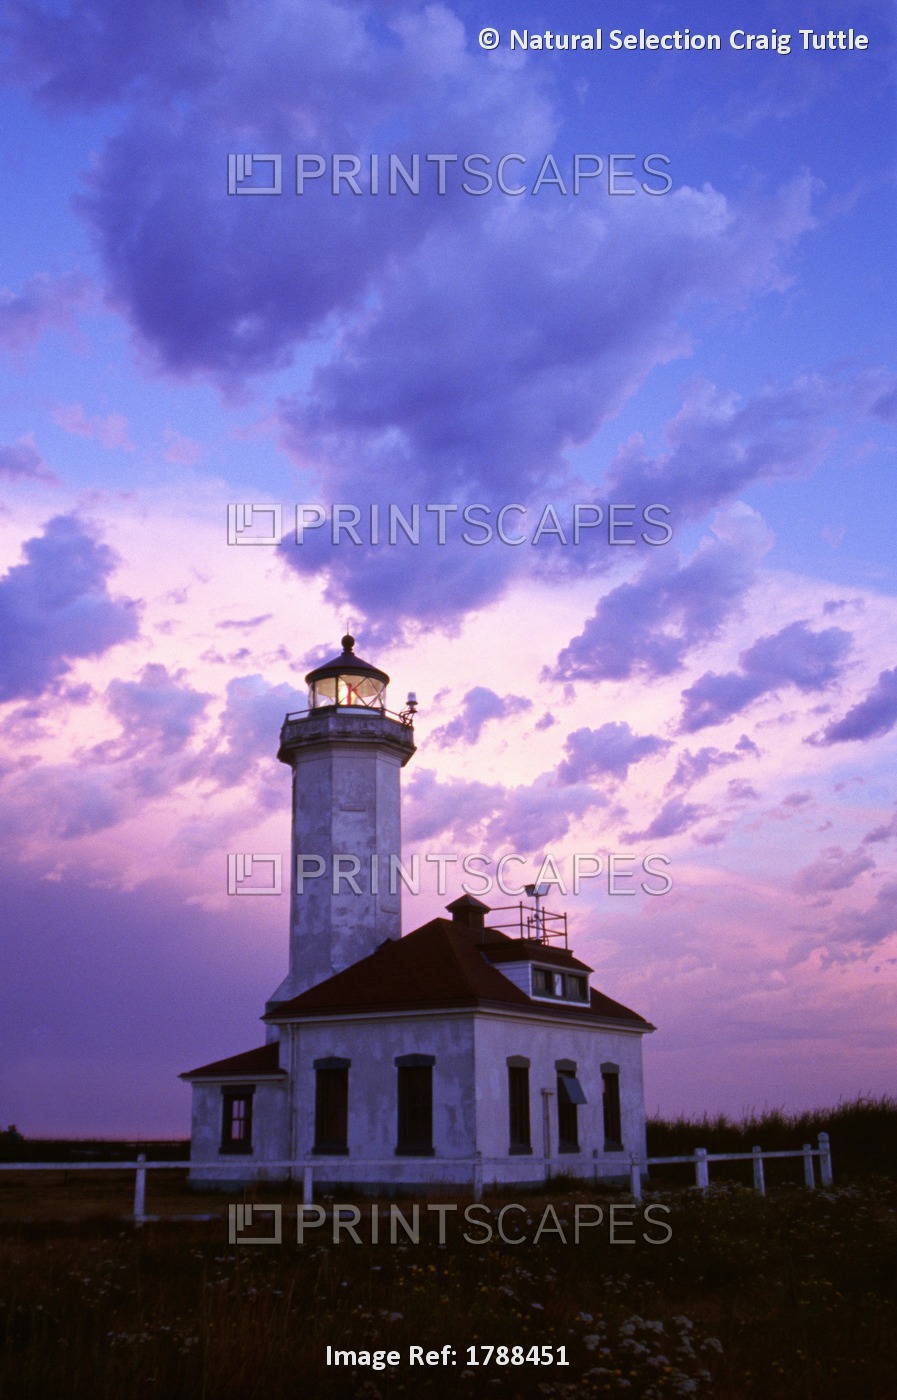 Point Wilson Lighthouse